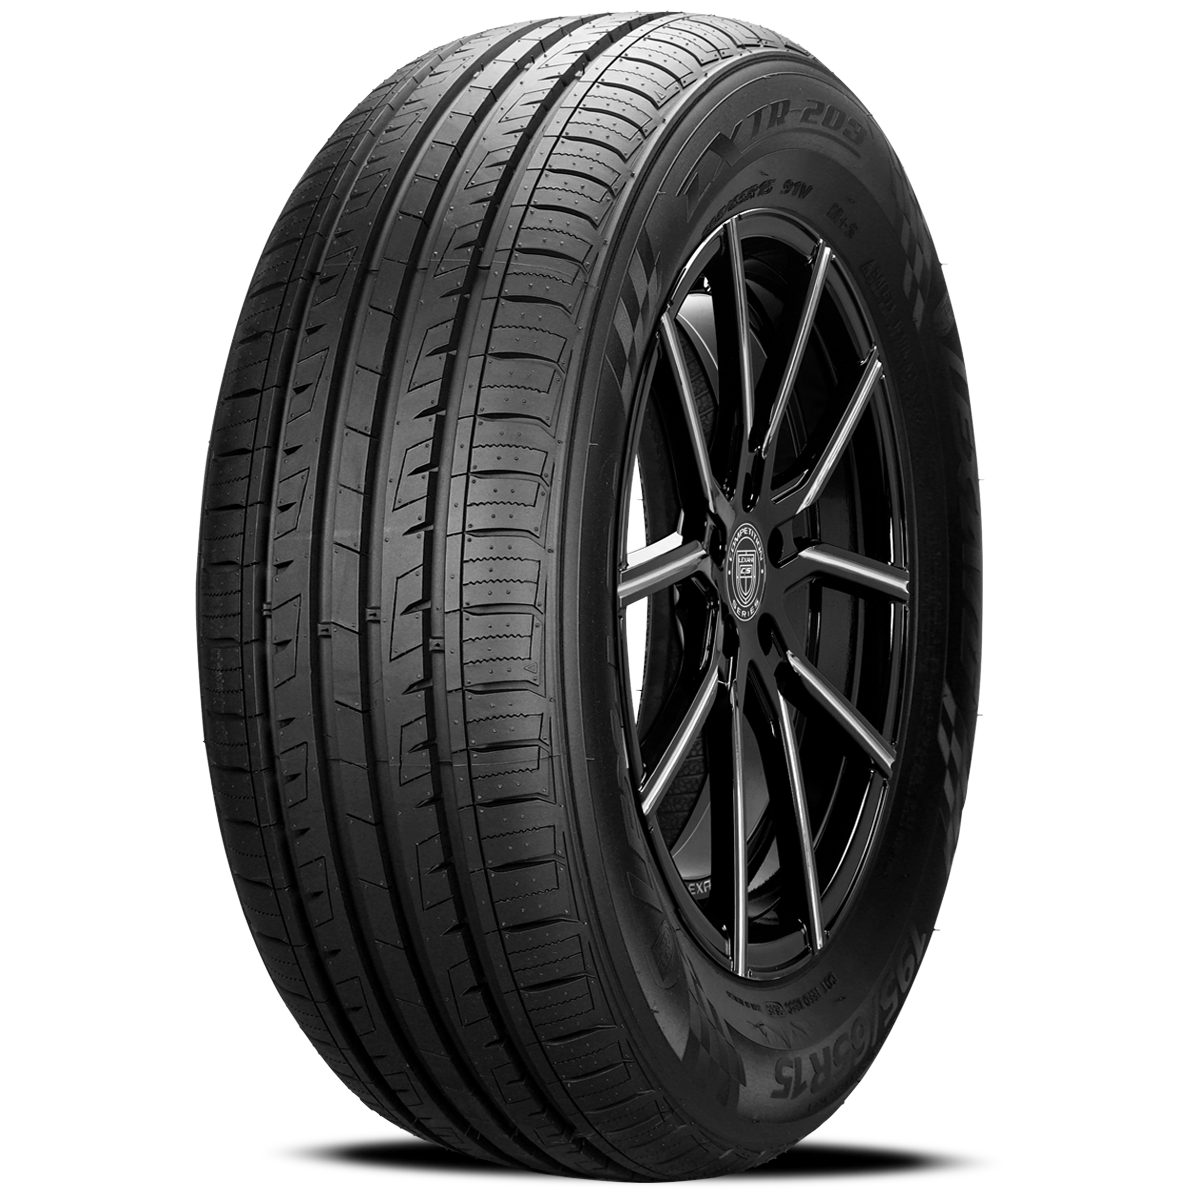 LEXANI LXTR-203 205/60R16 (25.7X8.1R 16) Tires